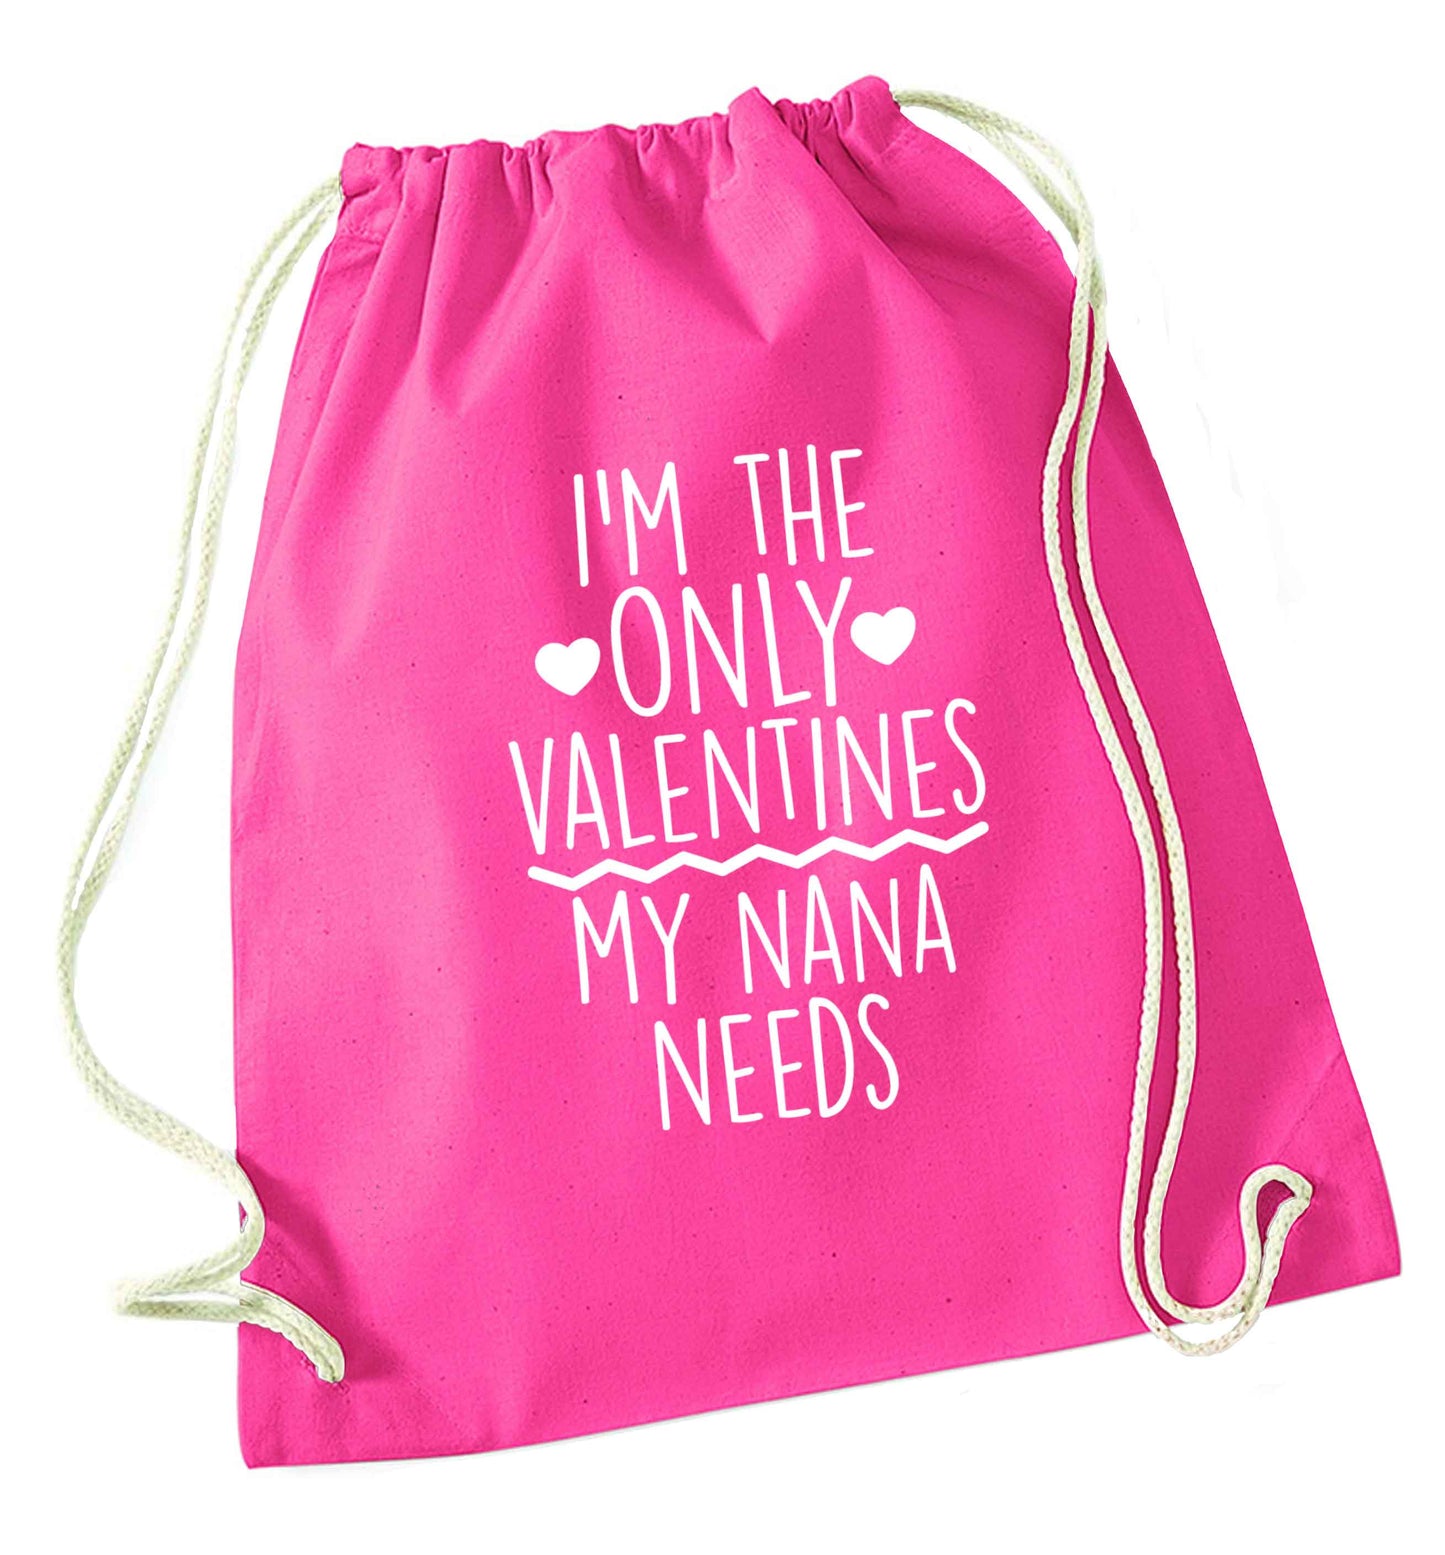 I'm the only valentines my nana needs pink drawstring bag